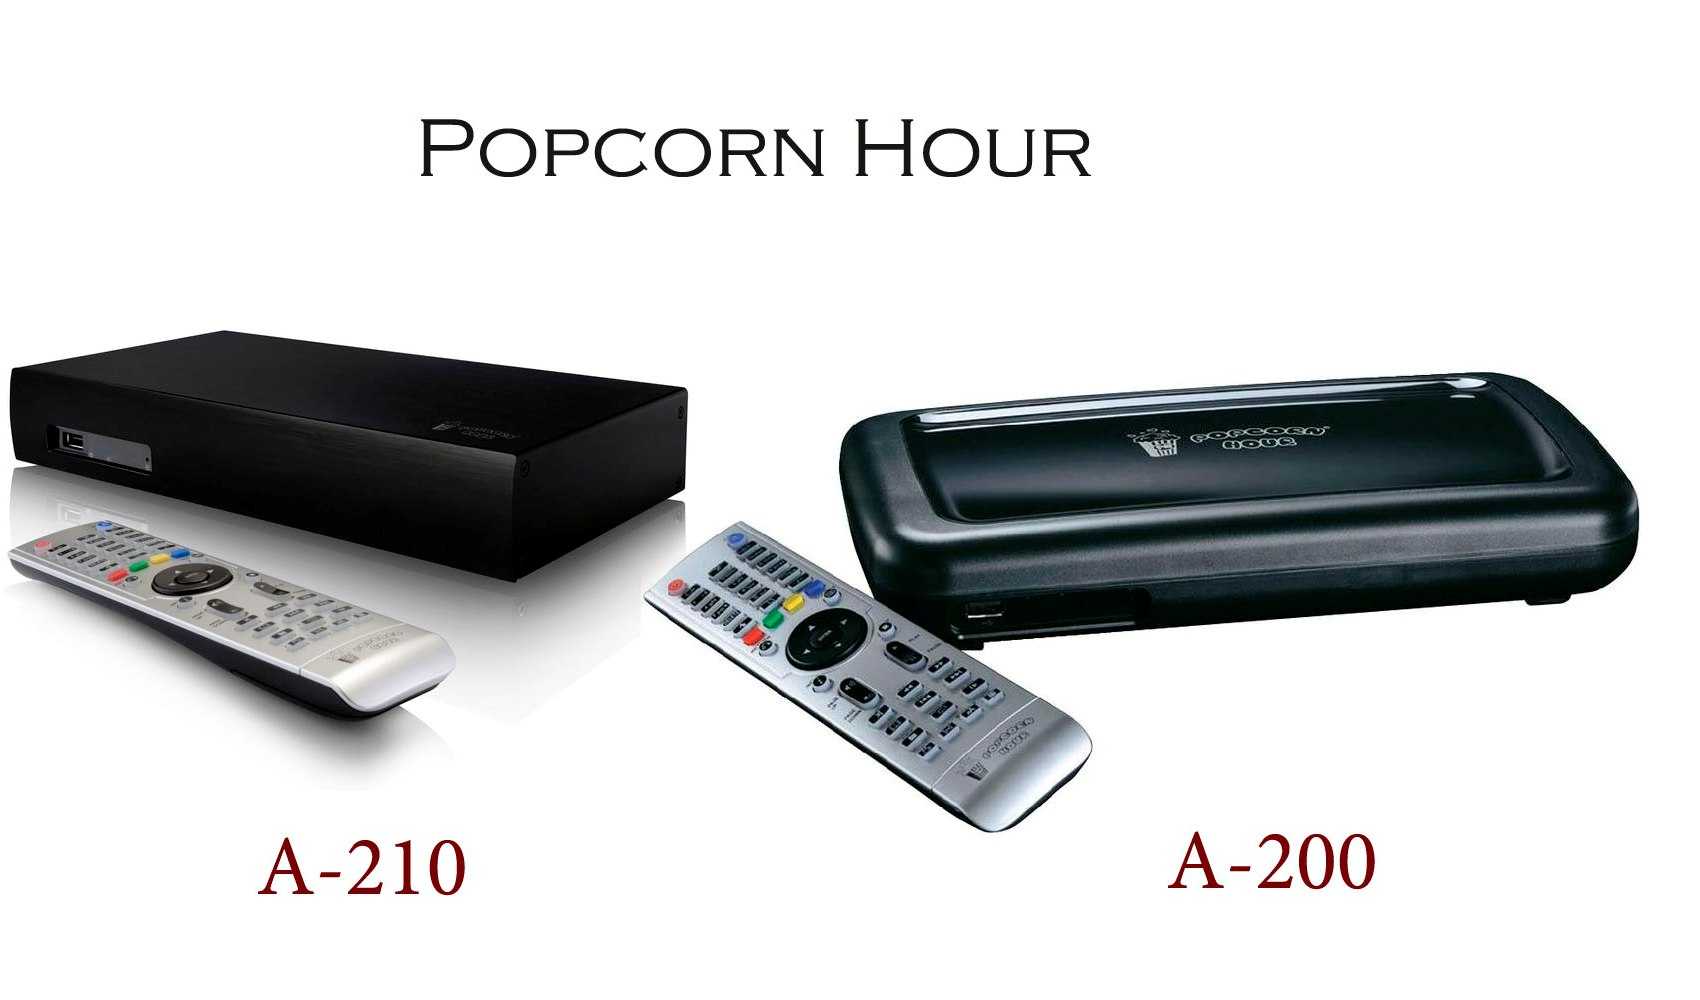 Popcorn hour a200 (a-200) 500gb